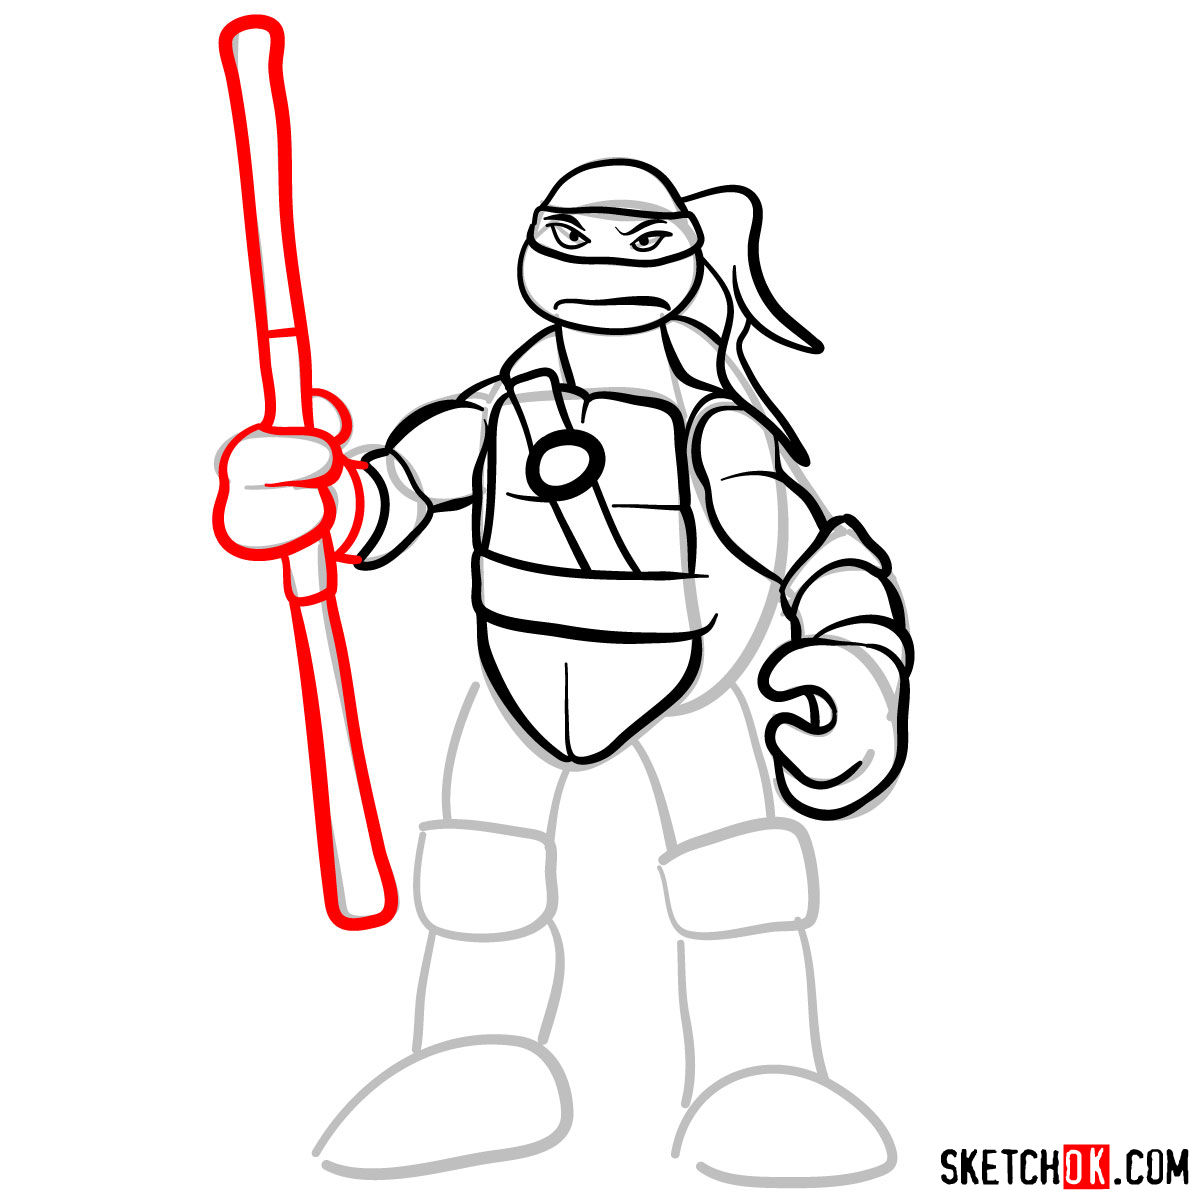 How to draw Donatello ninja turtle toy - step 08